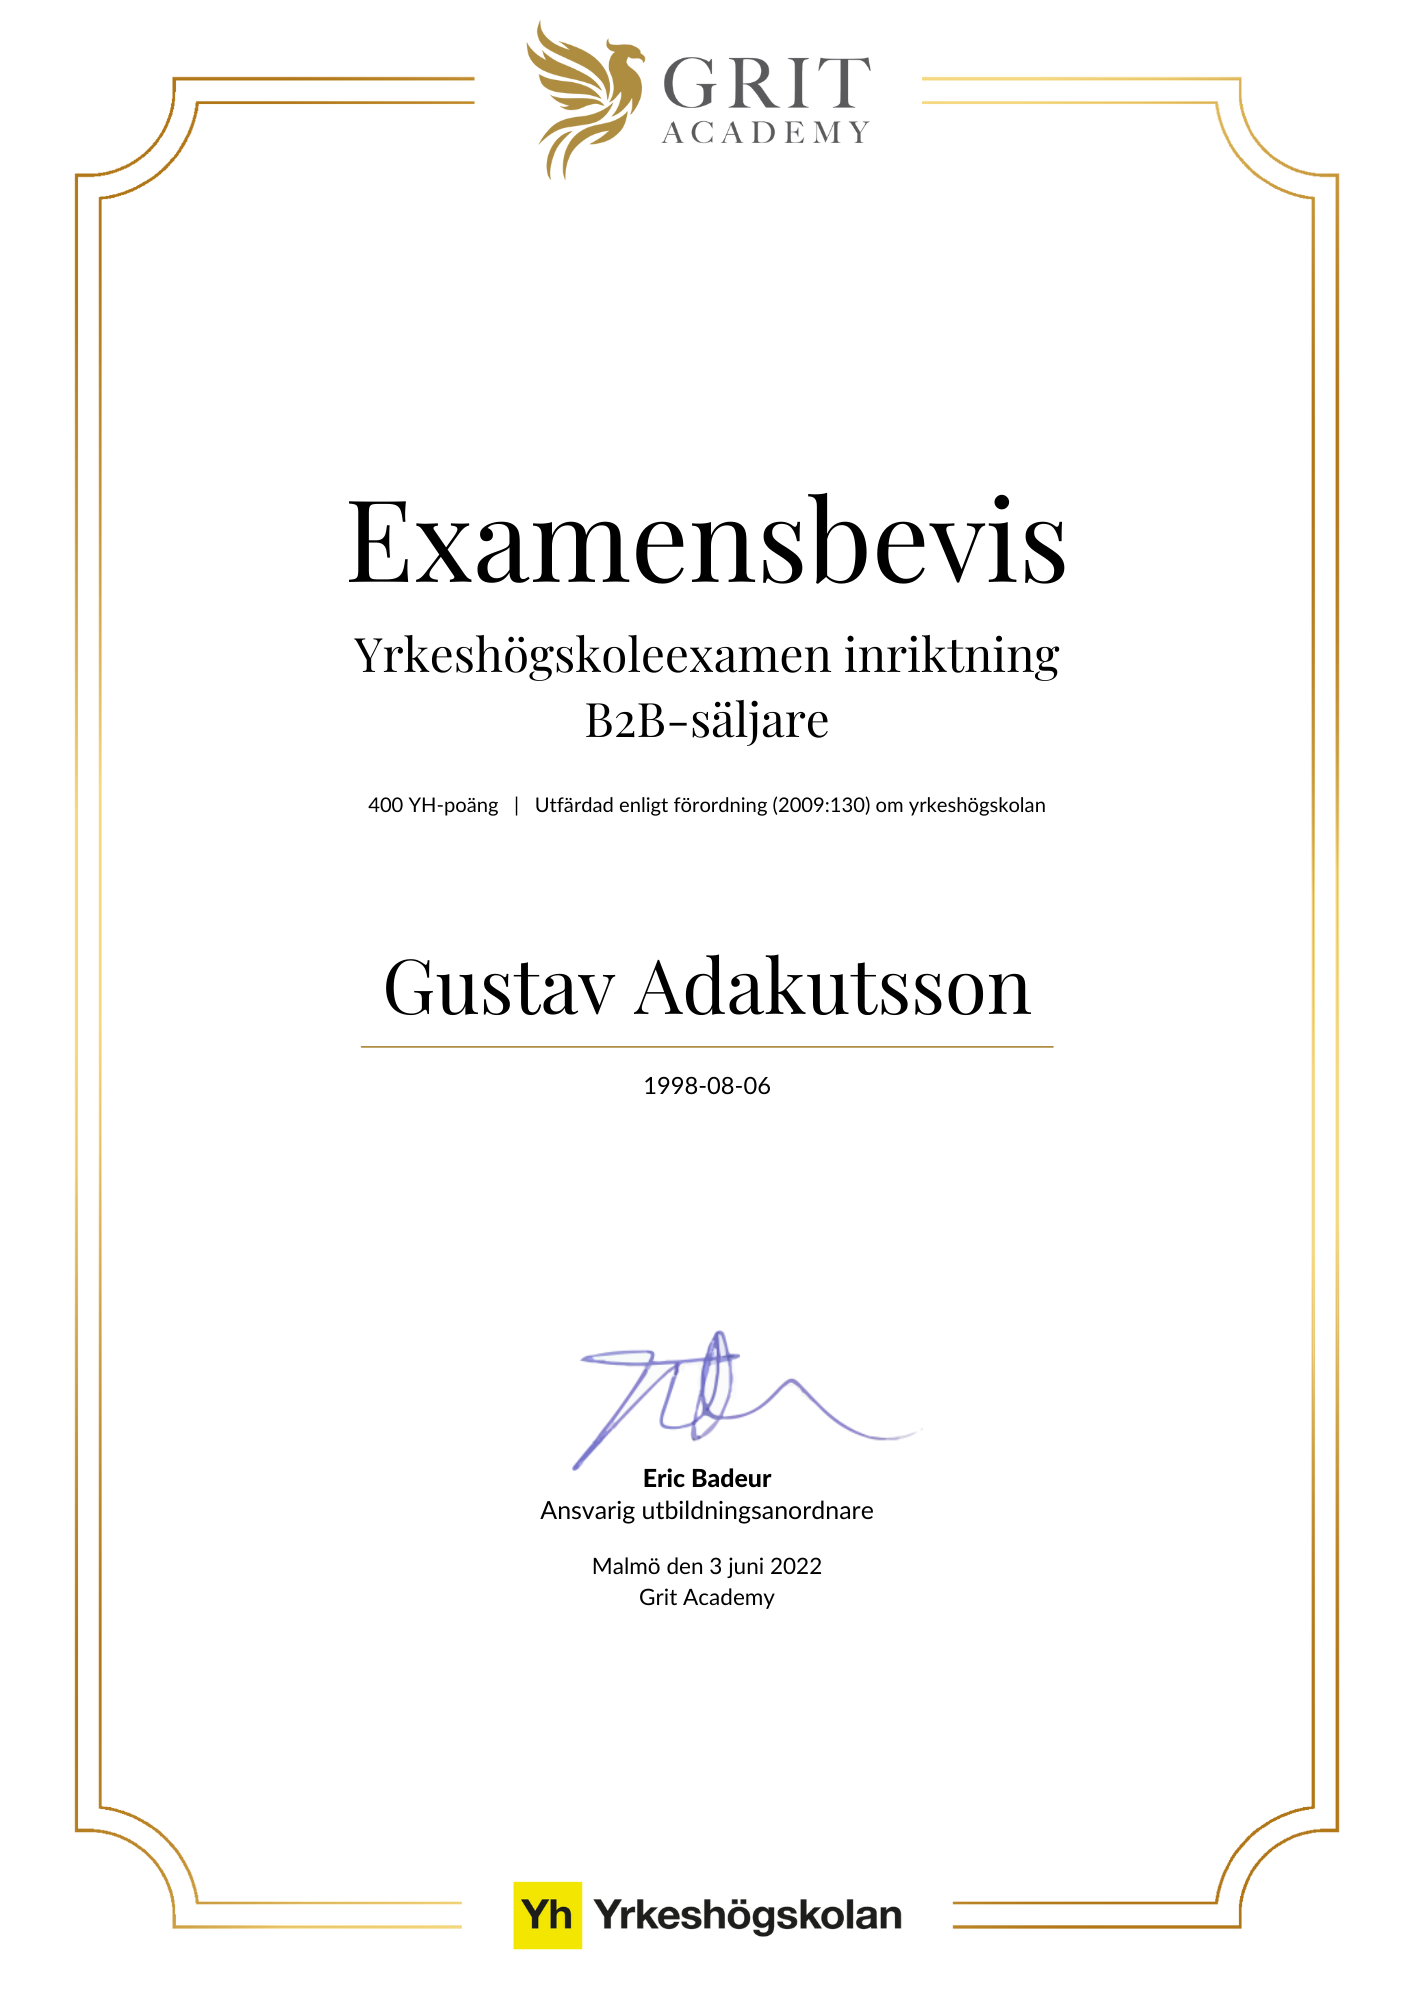 Examensbevis Gustav Adakutsson